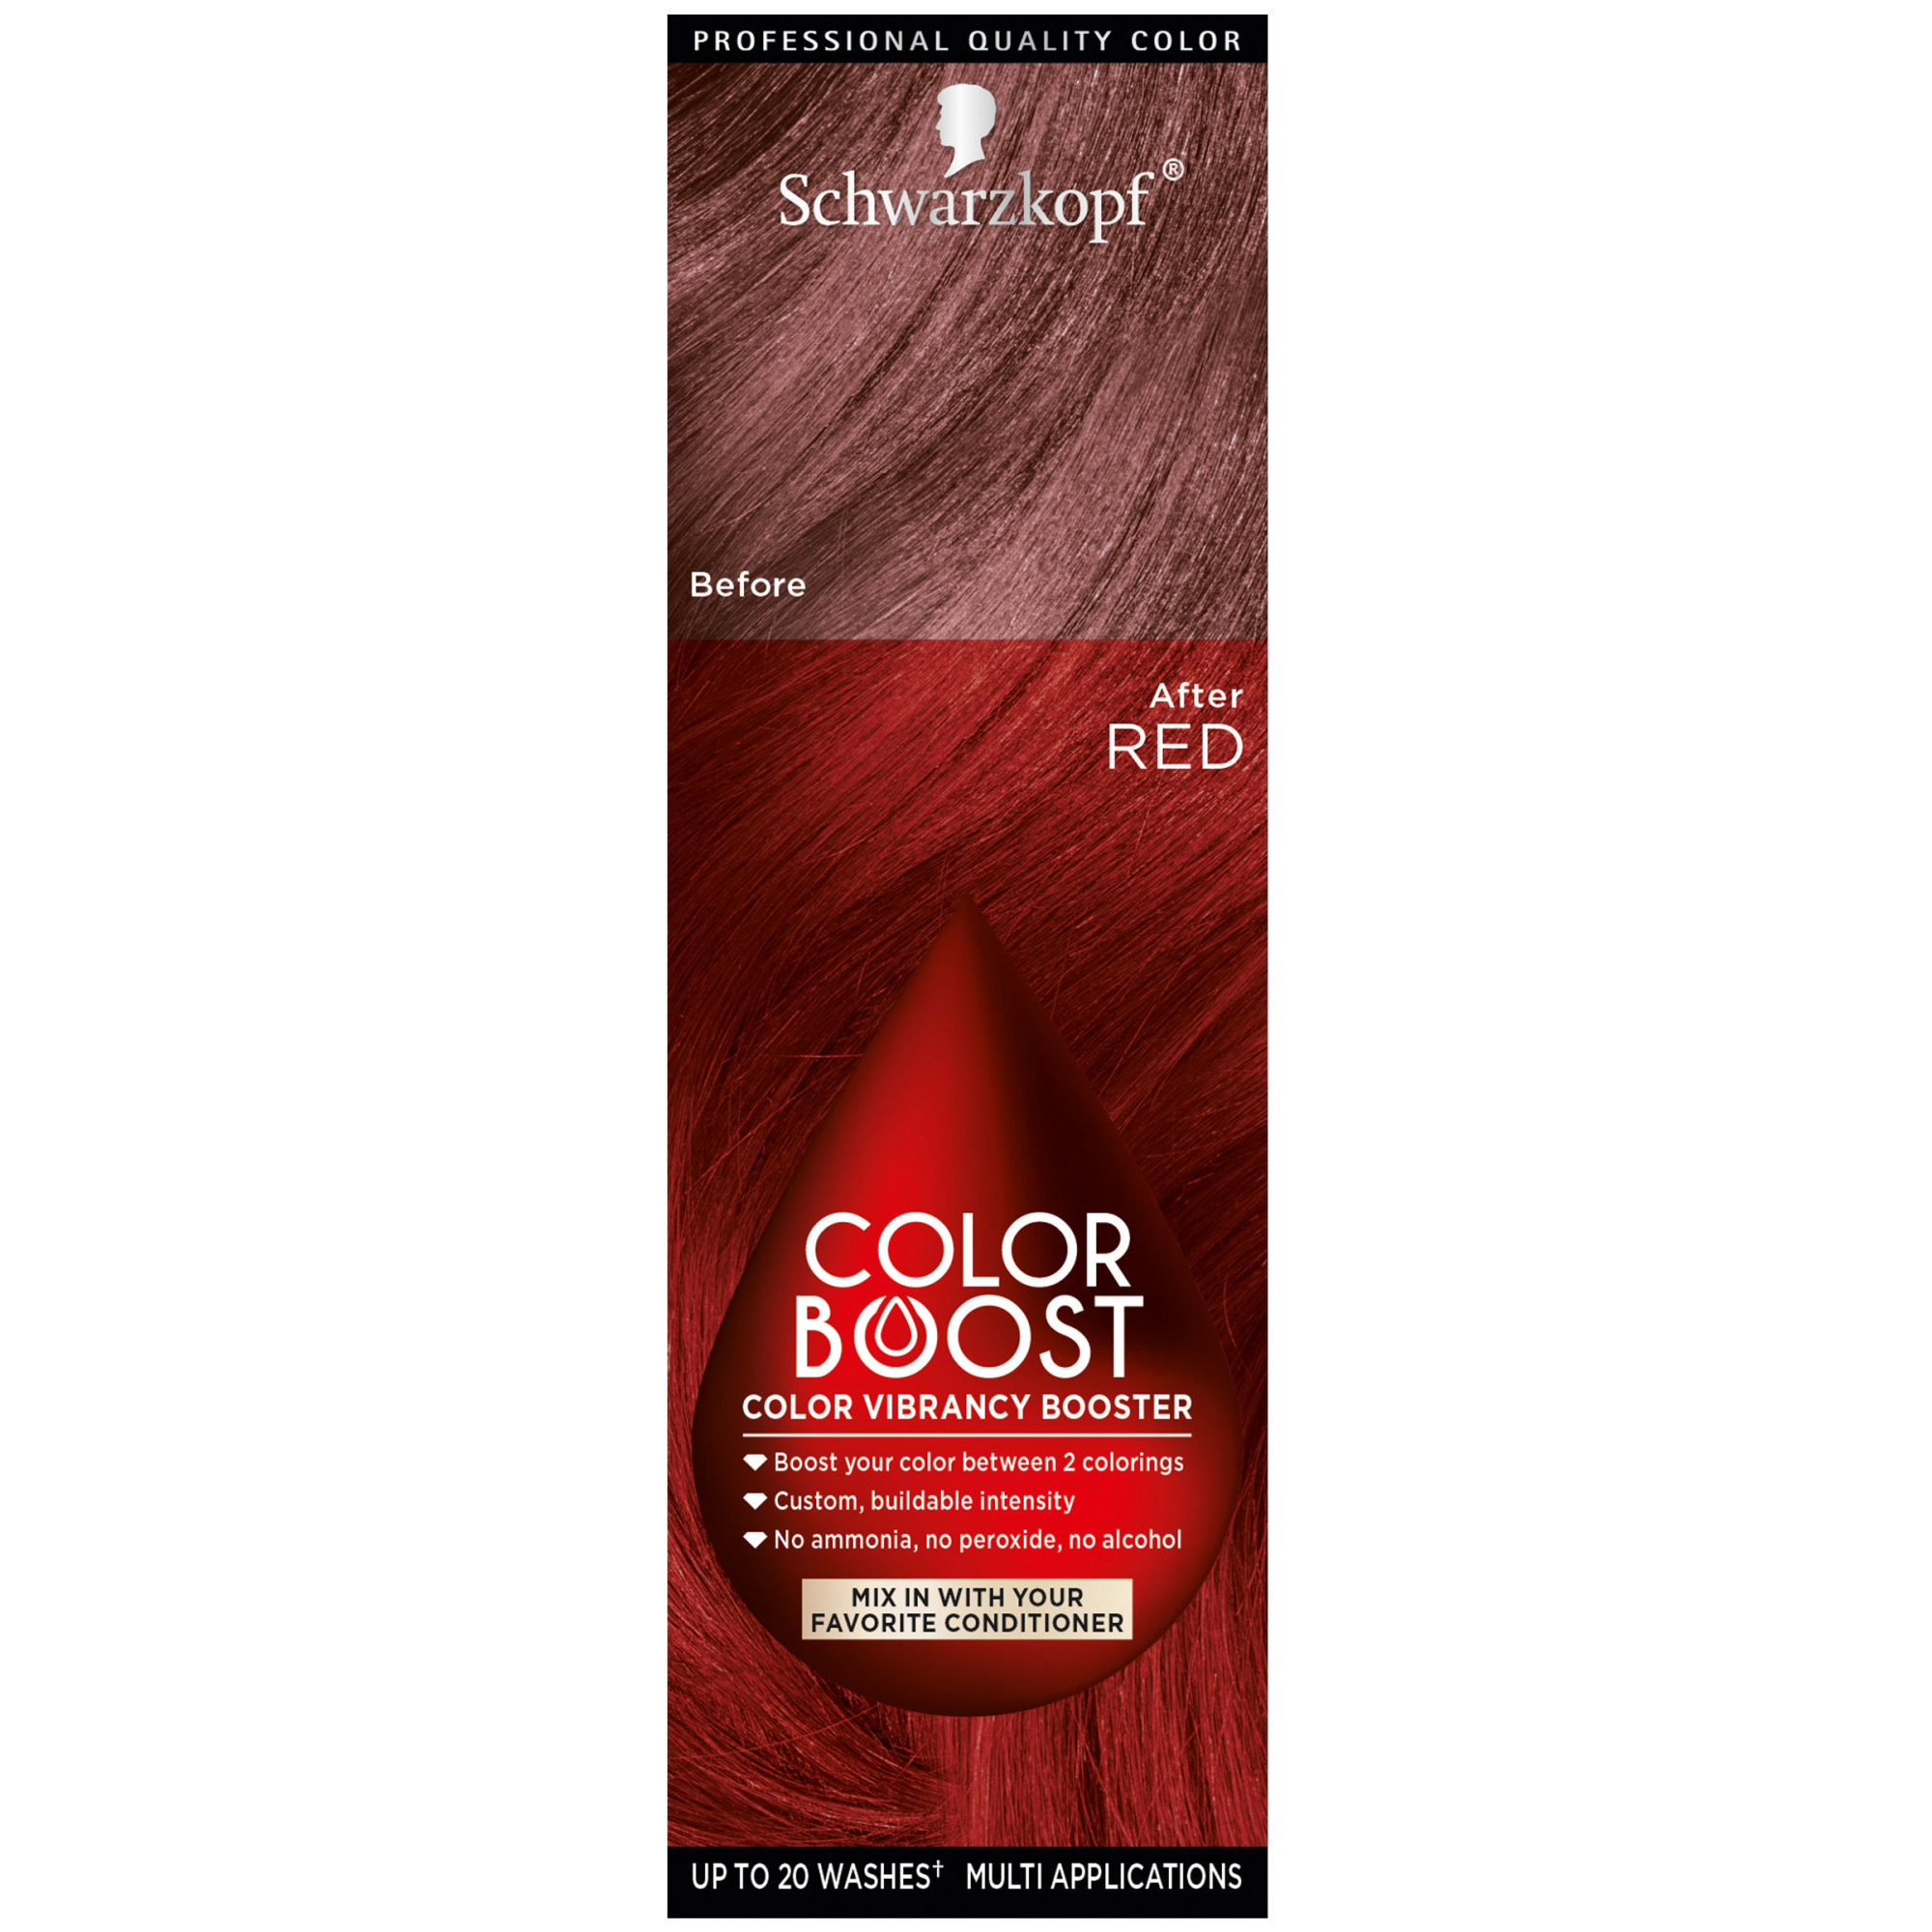 Schwarzkopf Color Boost Color Vibrancy Booster, Red, 1 fl oz - image 2 of 10